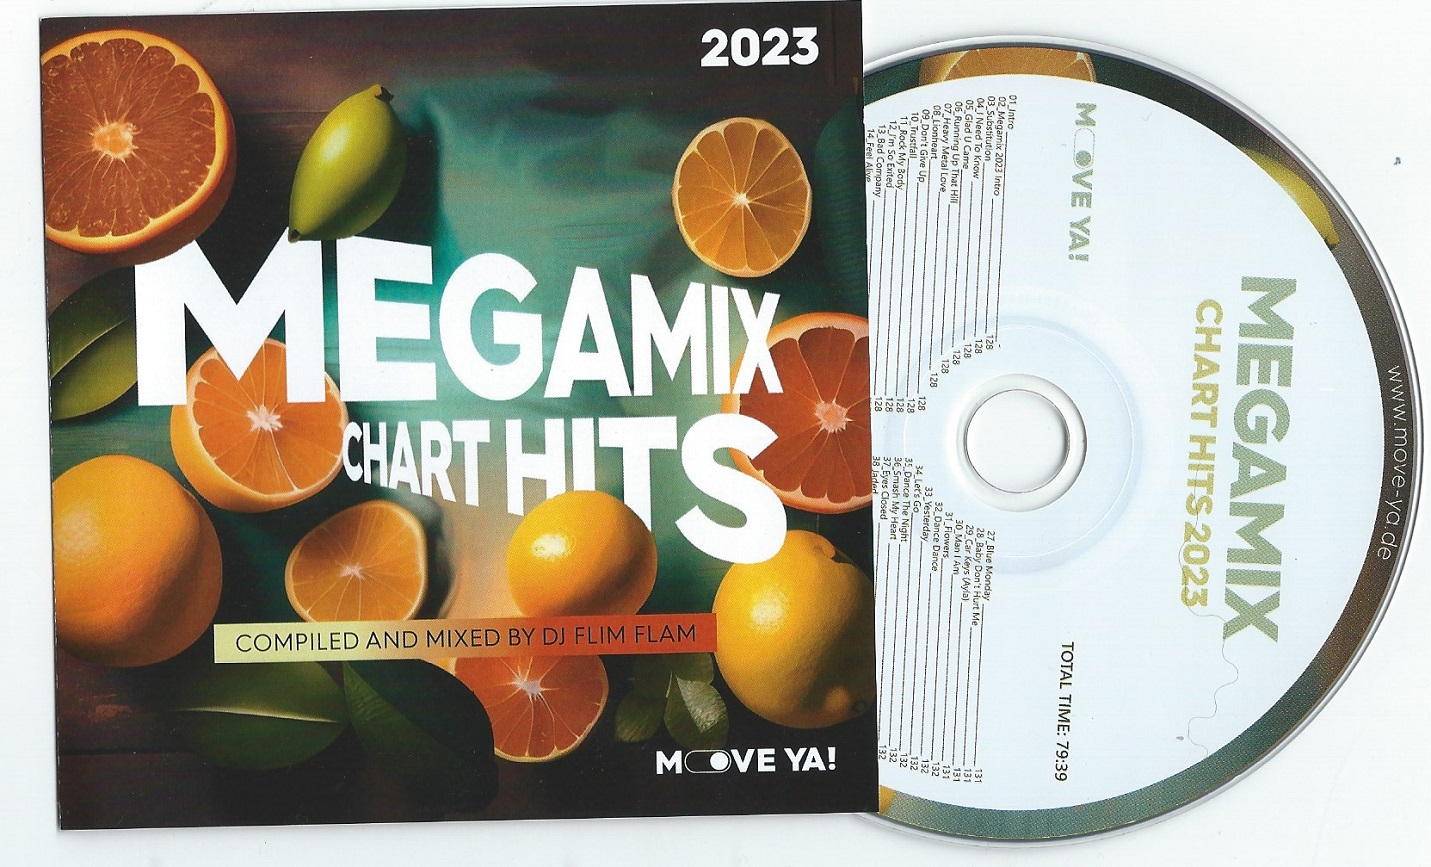 VA - Megamix Chart Hits 2023 (Compiled and Mixed by Flim Flam)